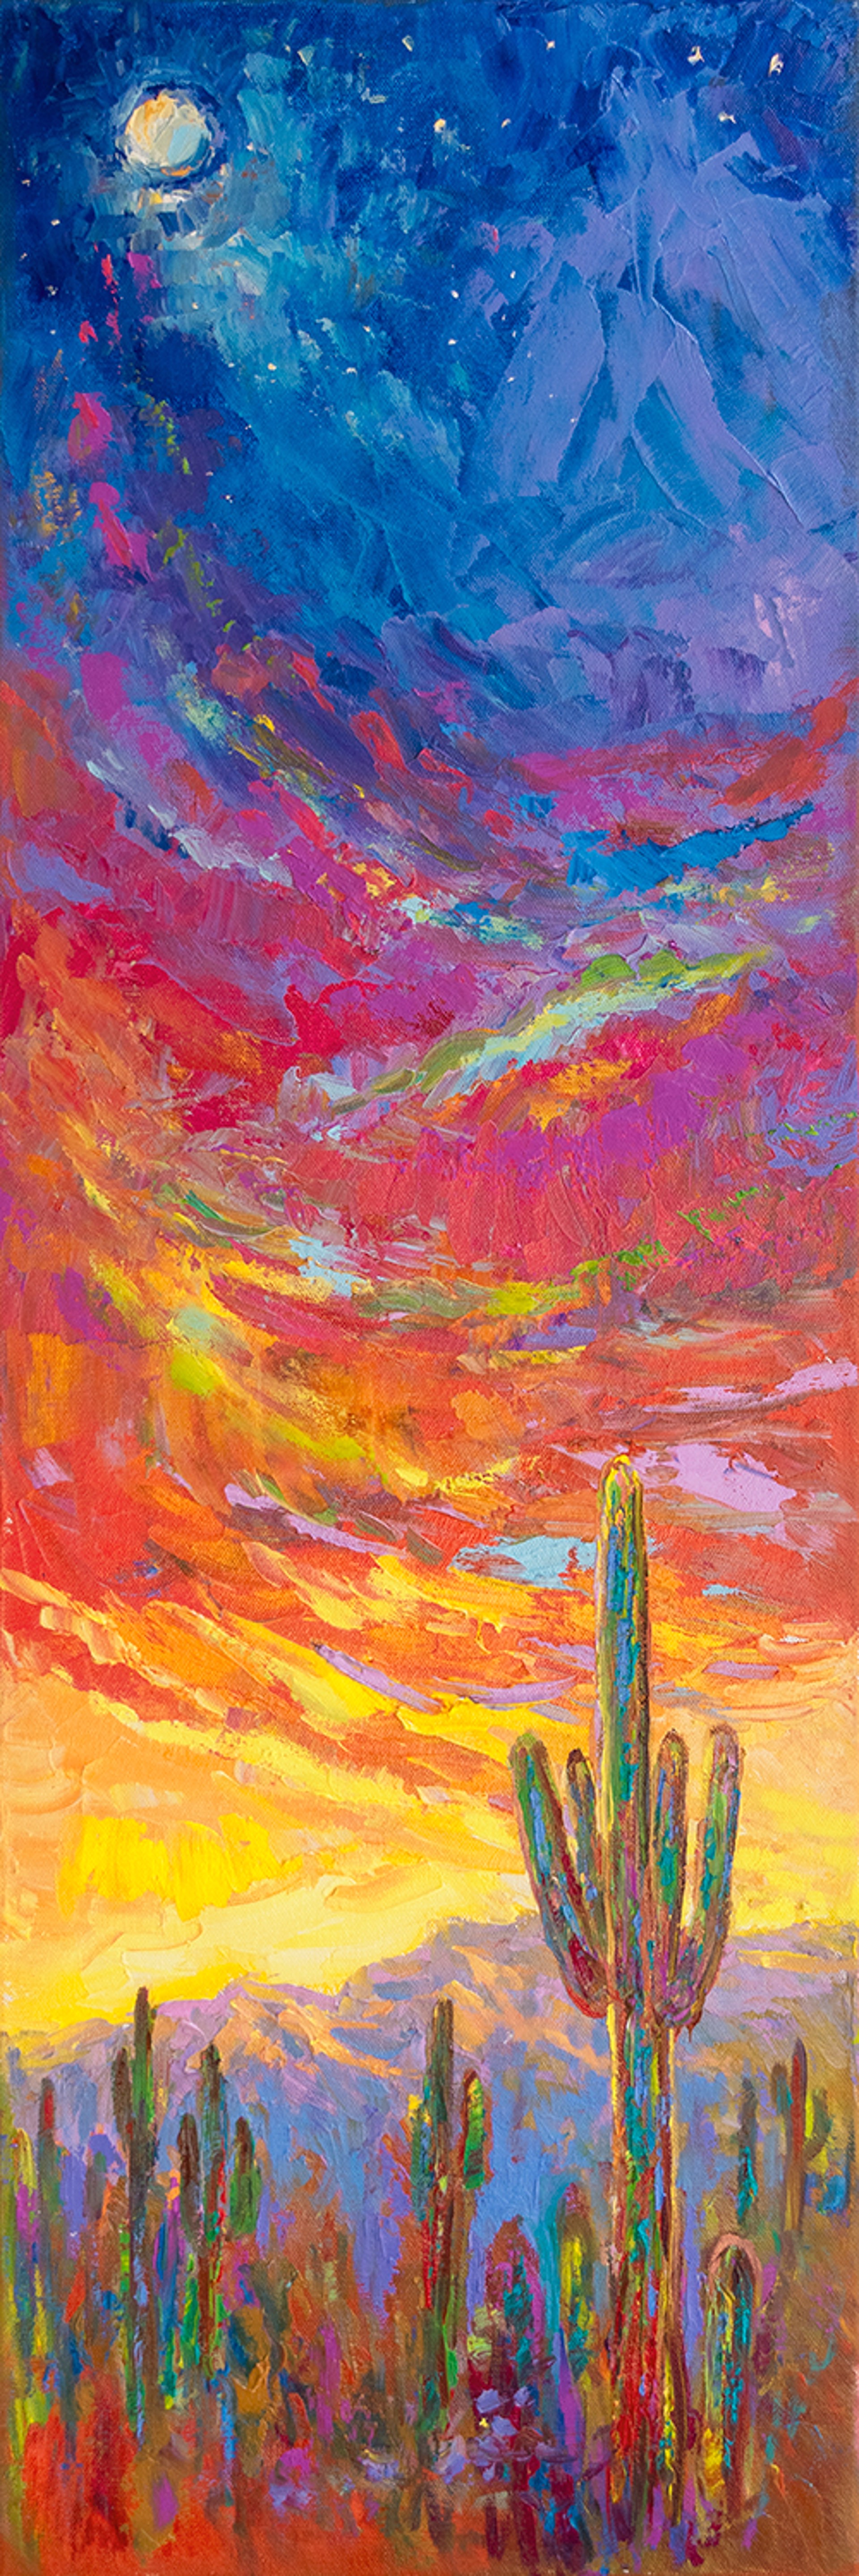 Stardust Trail by Barbara Meikle